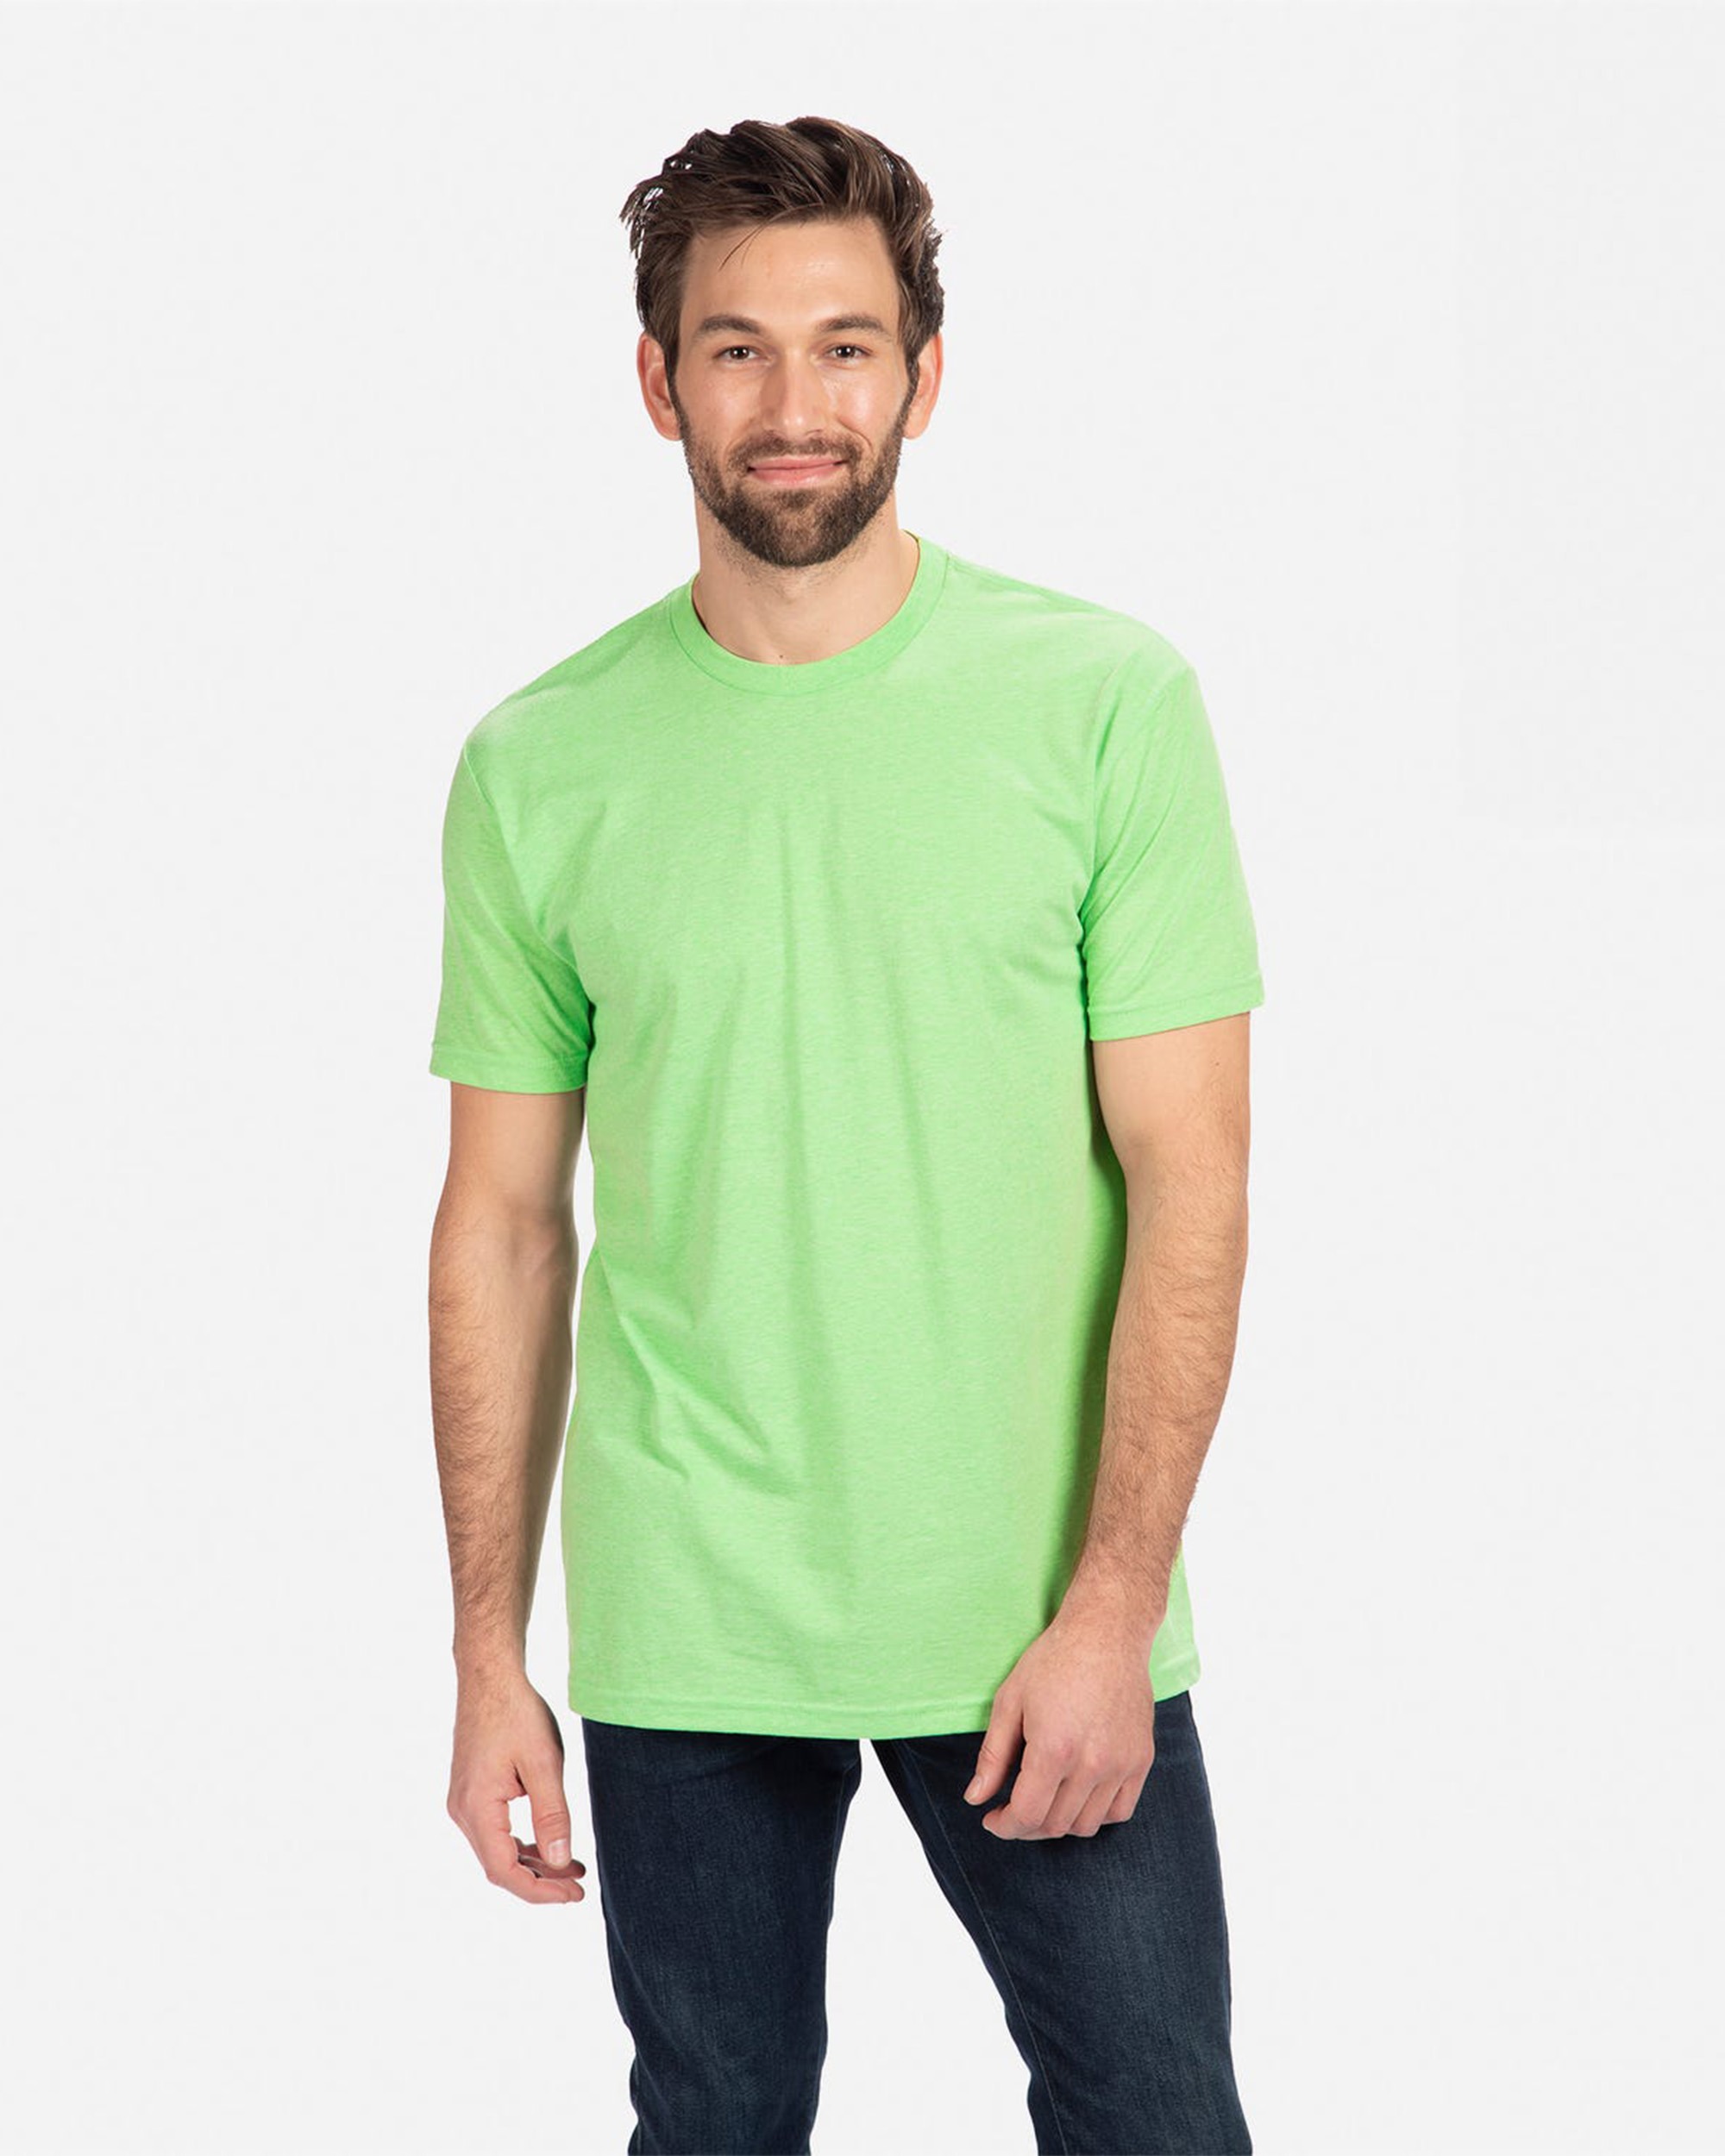 Next Level Apparel® 6210 Unisex CVC T-Shirt